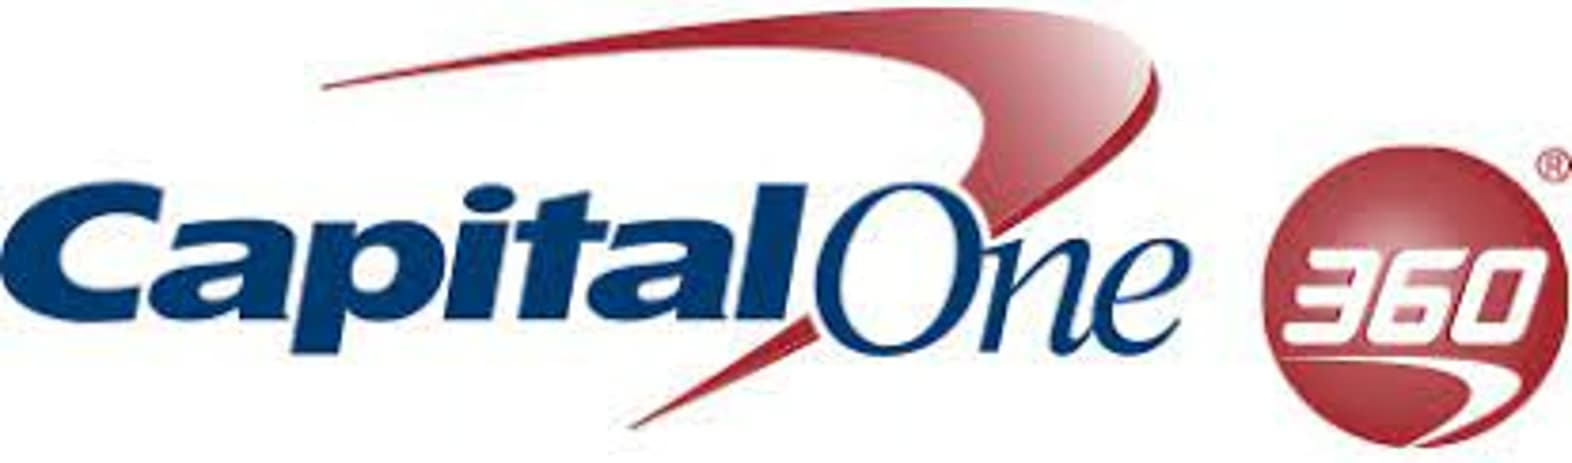 CapitalOne 360 logo